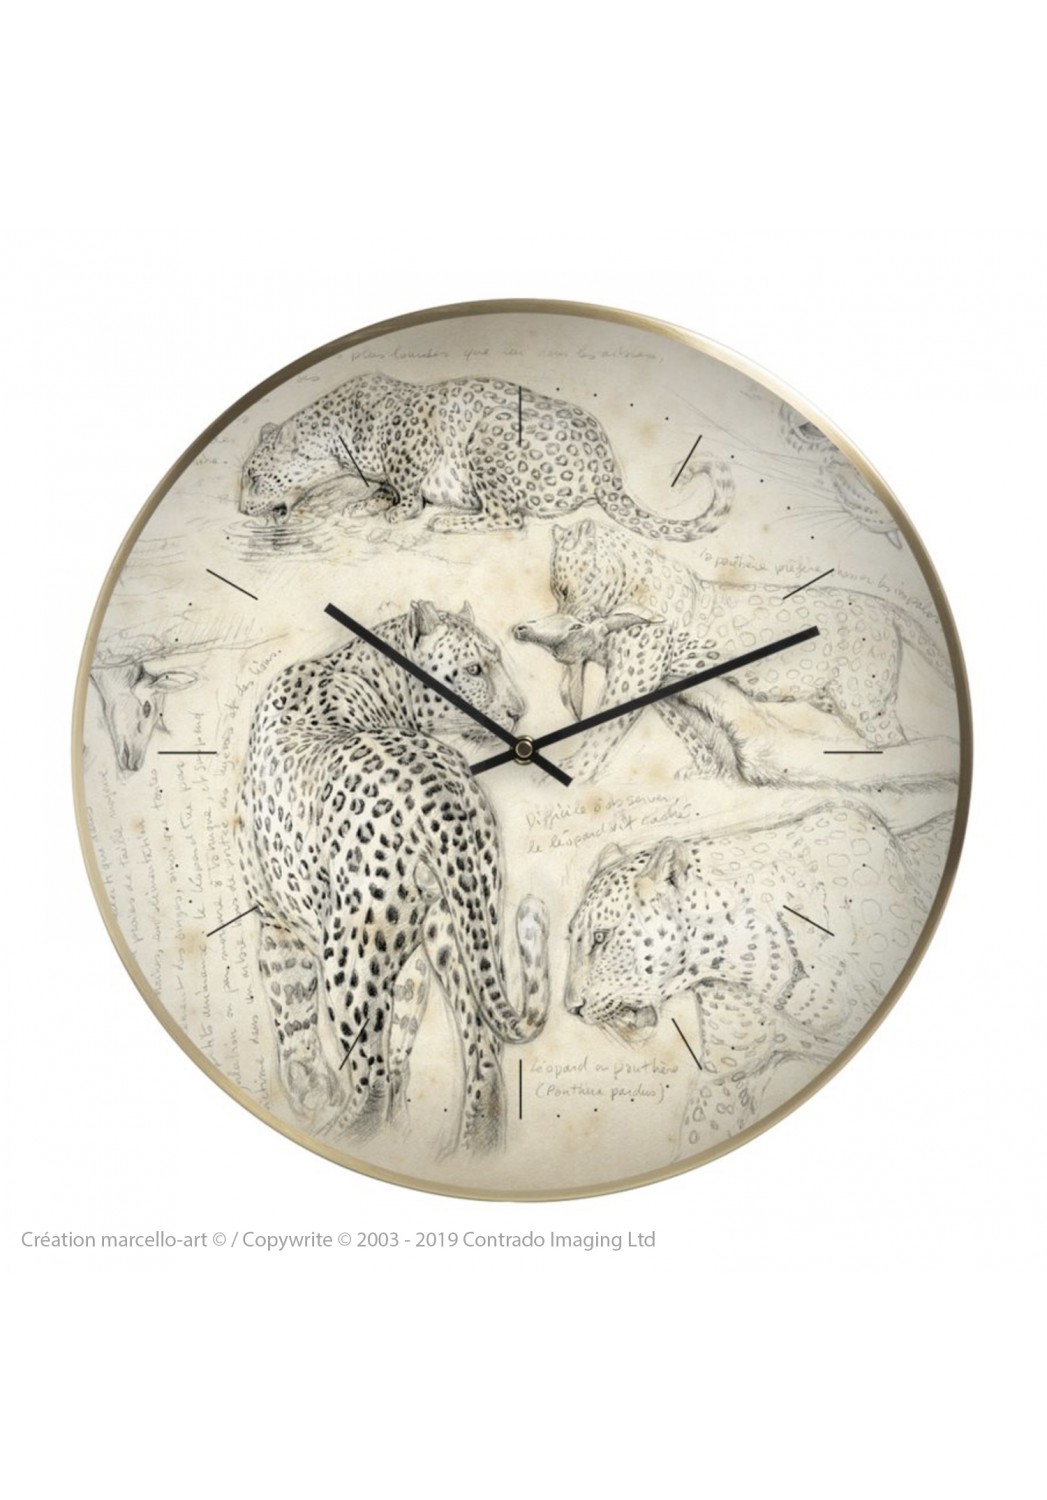 Marcello-art: Decoration accessoiries Wall clock 01 Leopard